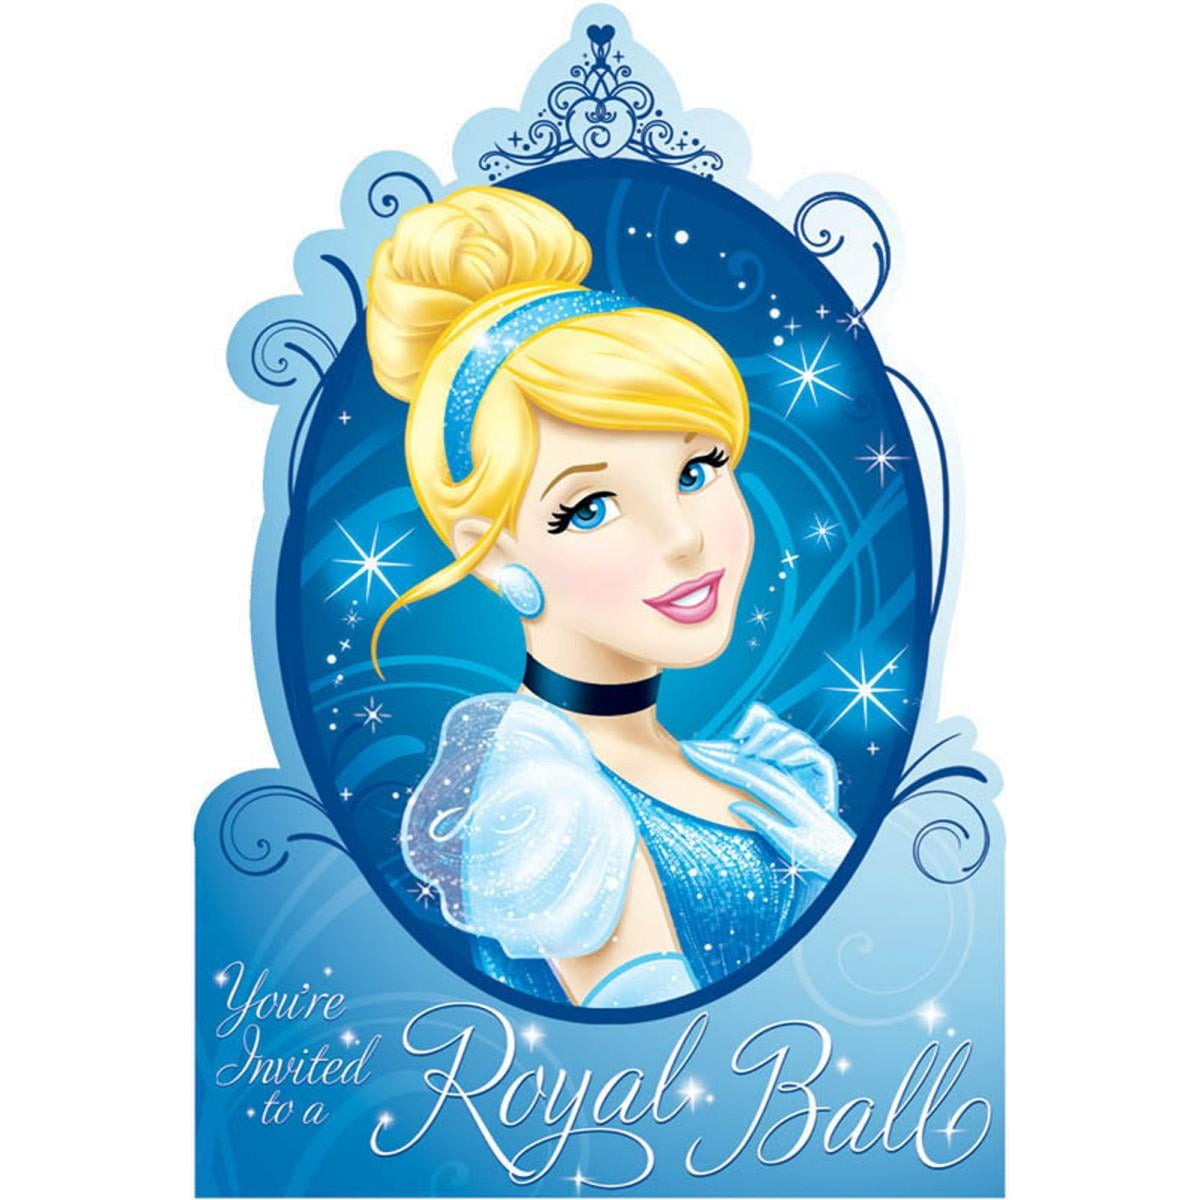 10 x Disney Princess Cinderella birthday Party Invitations With 10 FREE Envelopes